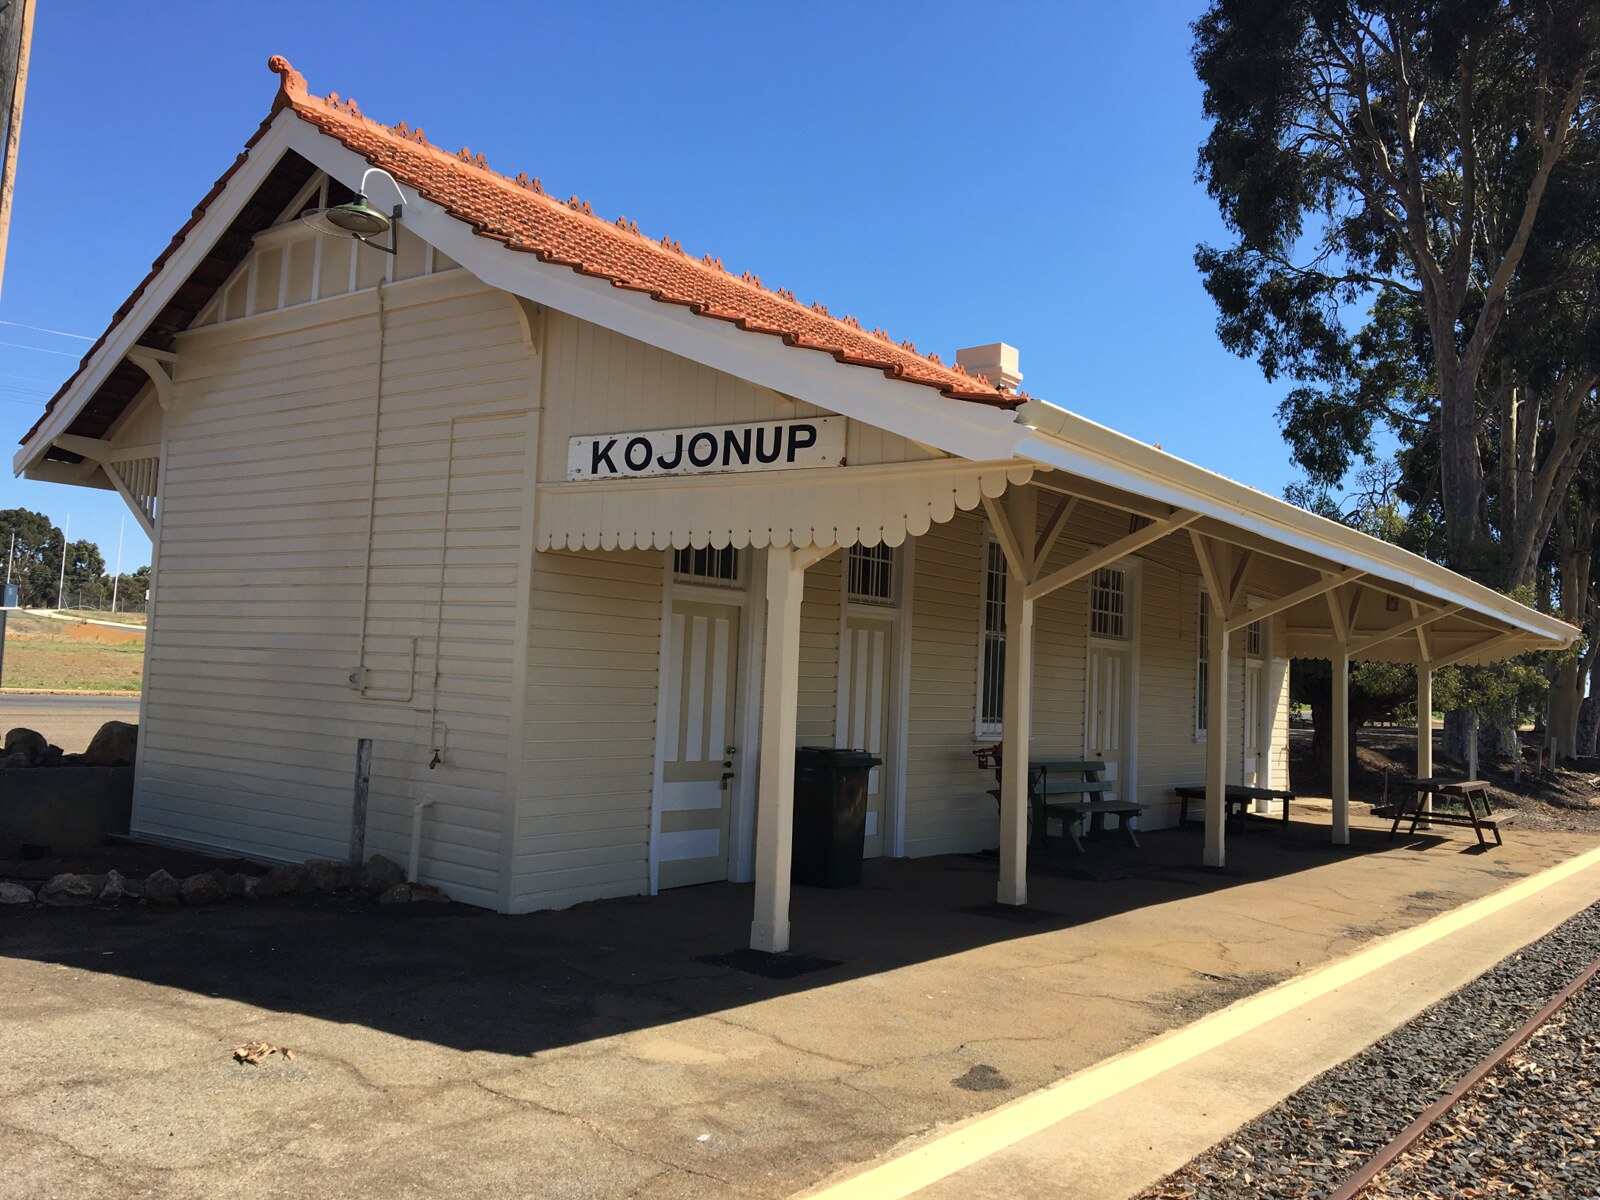 The heritage train station in Kojonup Western Australia